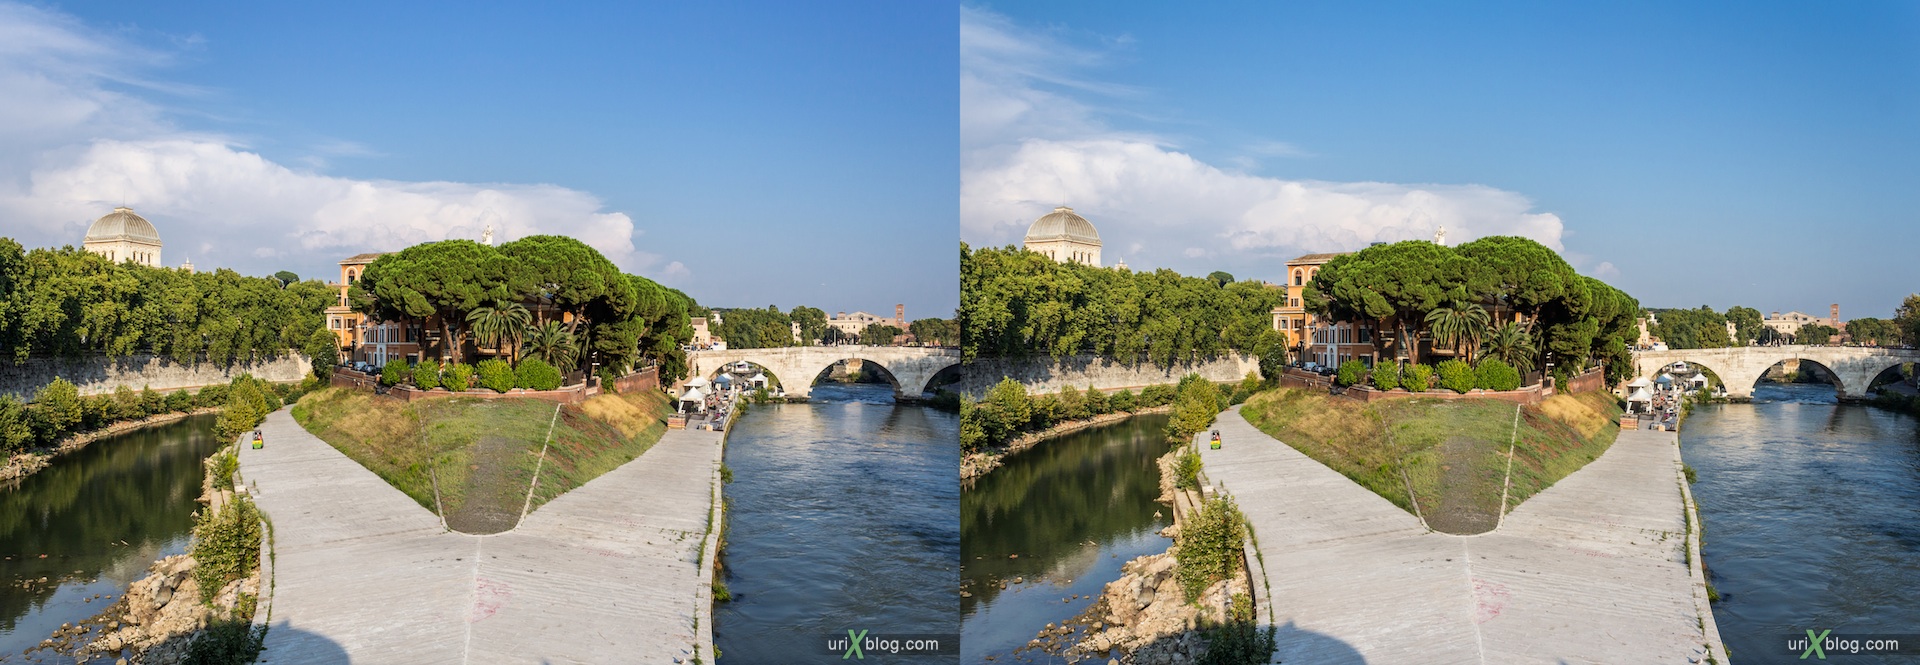 2012, Ponte Garibaldi bridge, Tiber island, Tiber river, 3D, stereo pair, cross-eyed, crossview, cross view stereo pair